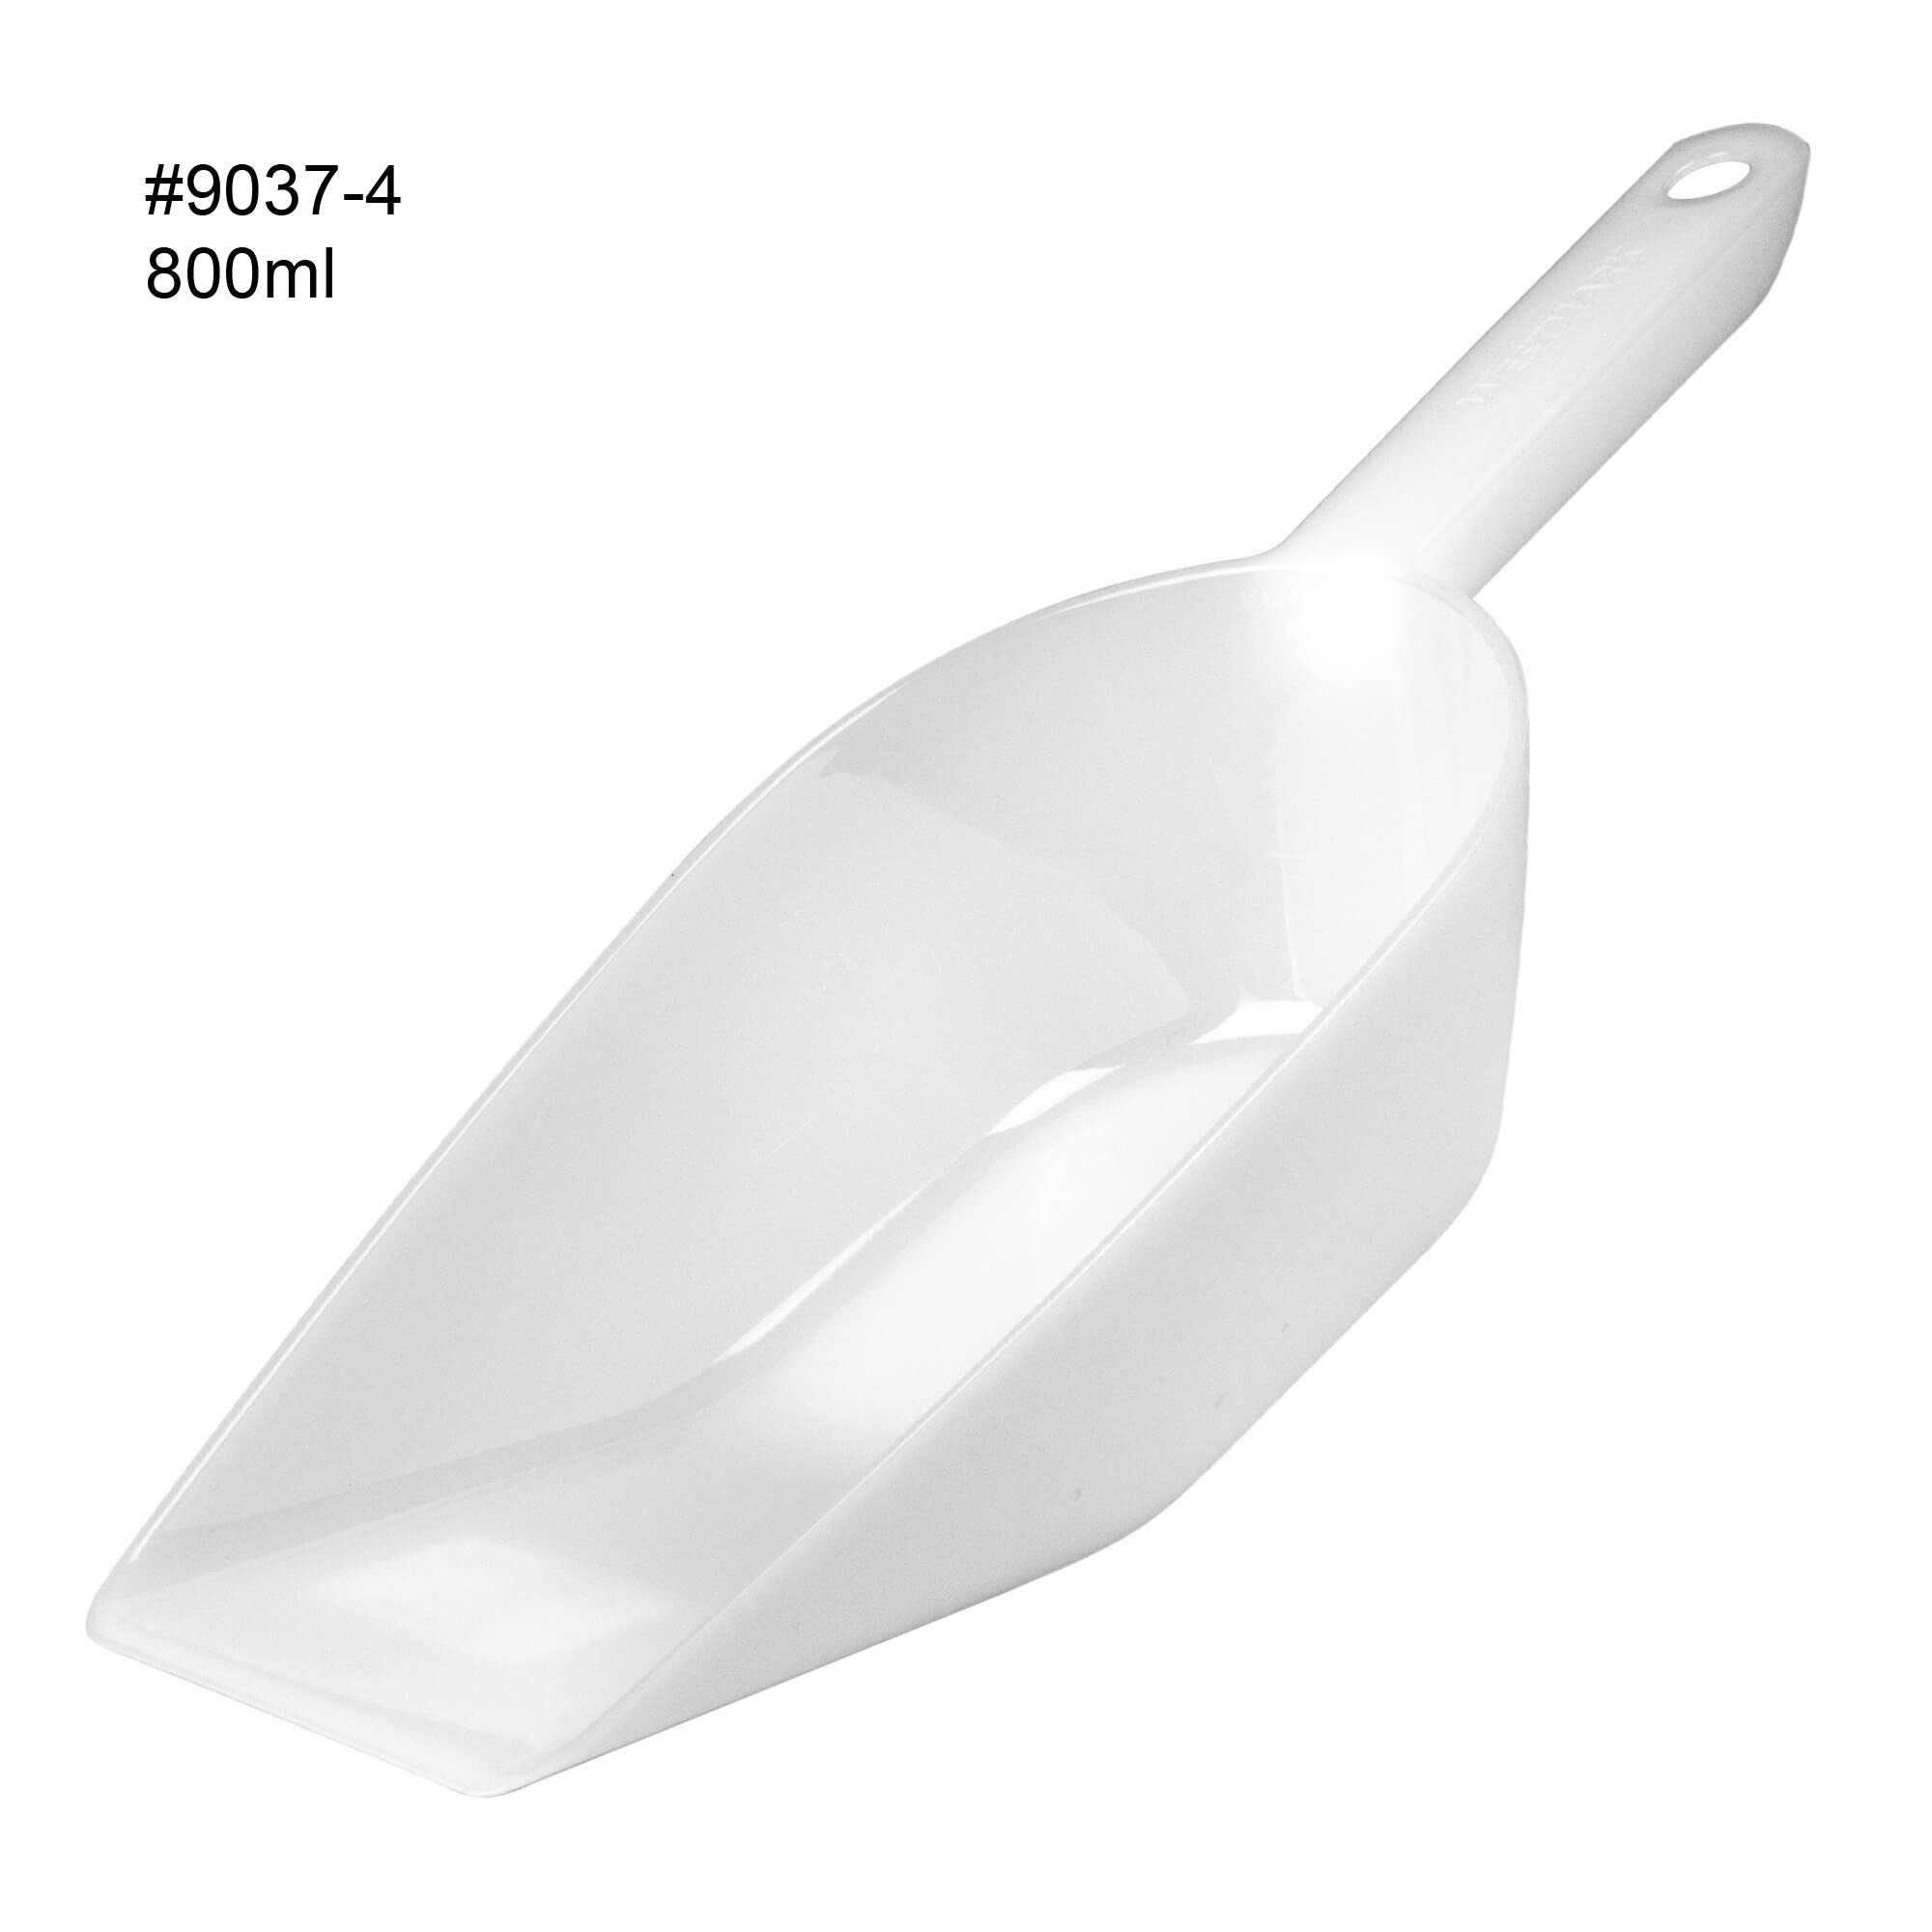 Ice scoop, HD-PE plastic - 125ml